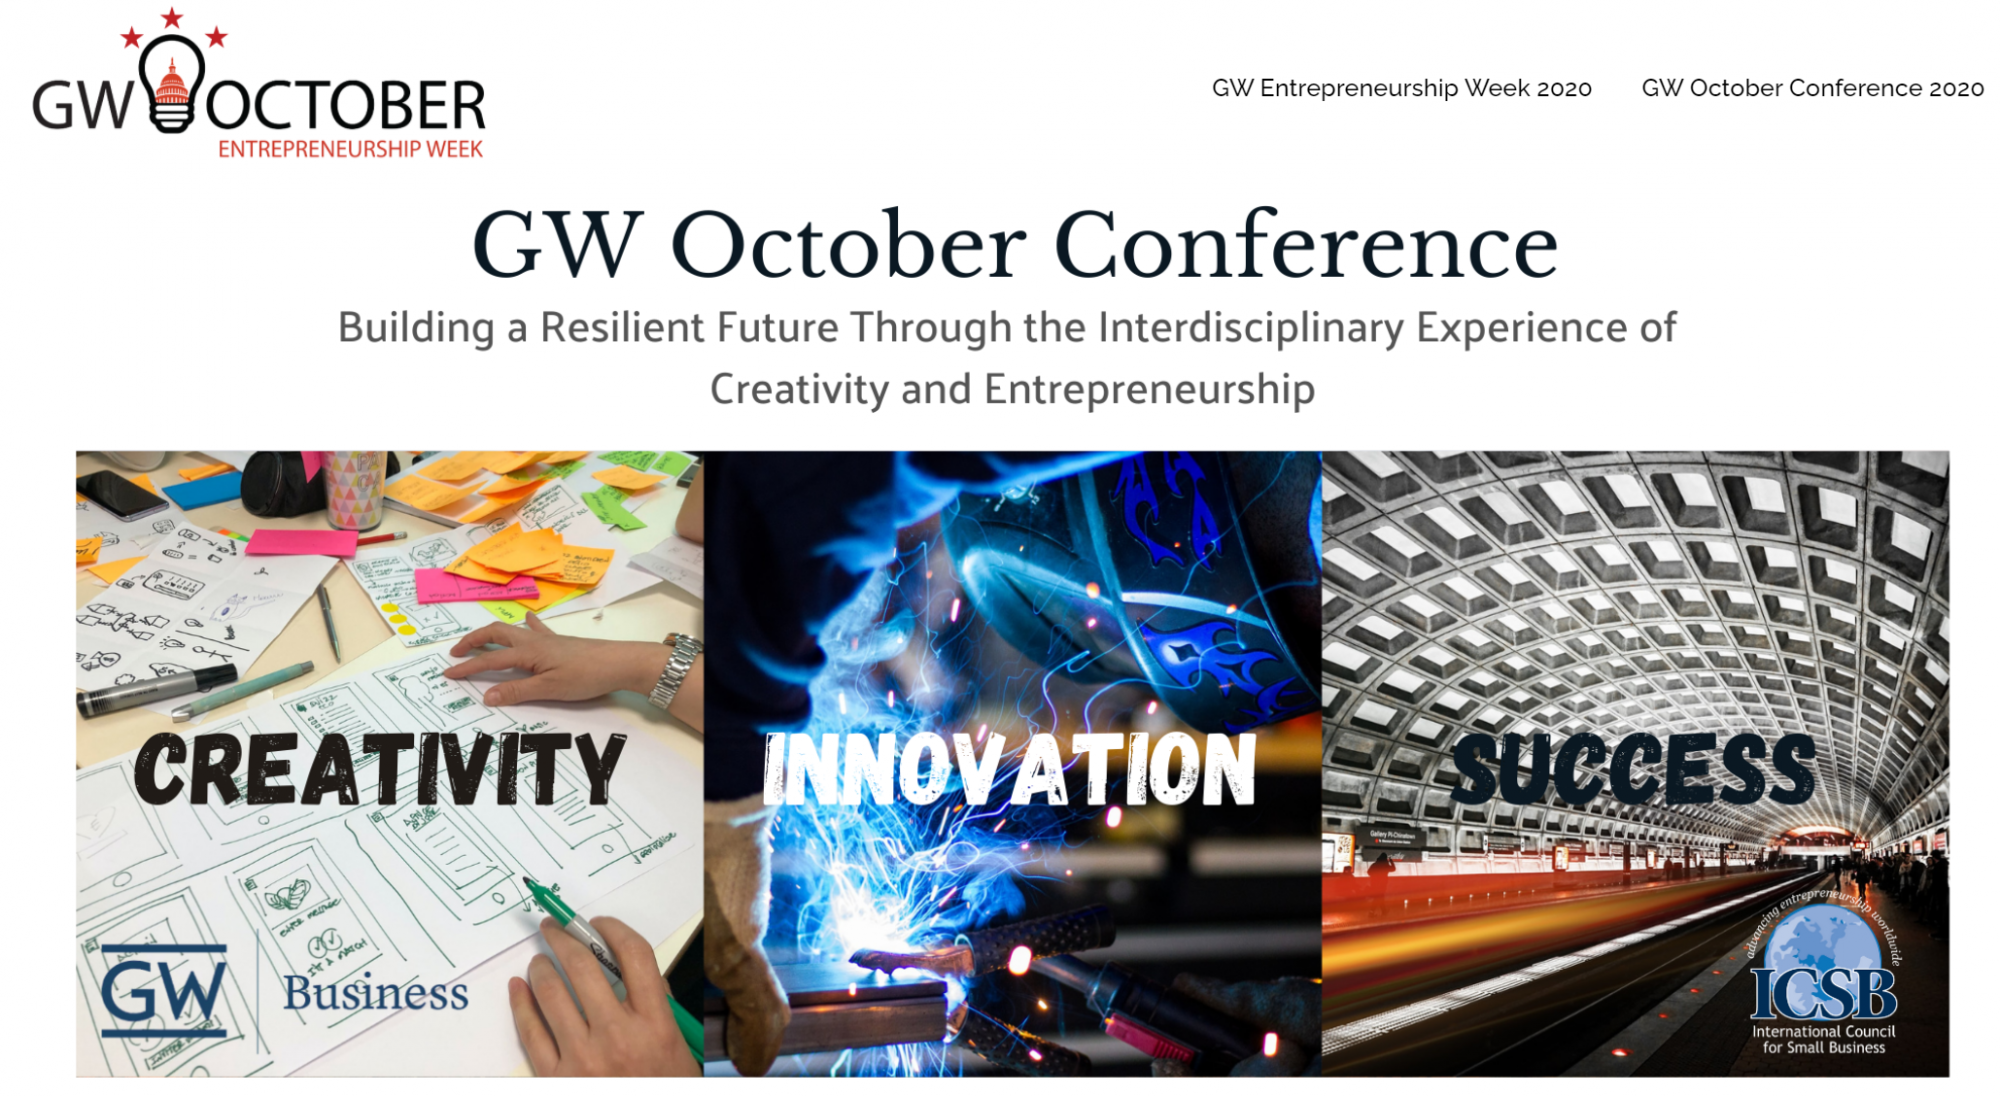 GW October 2020 Creativity & Innovation conference flyer